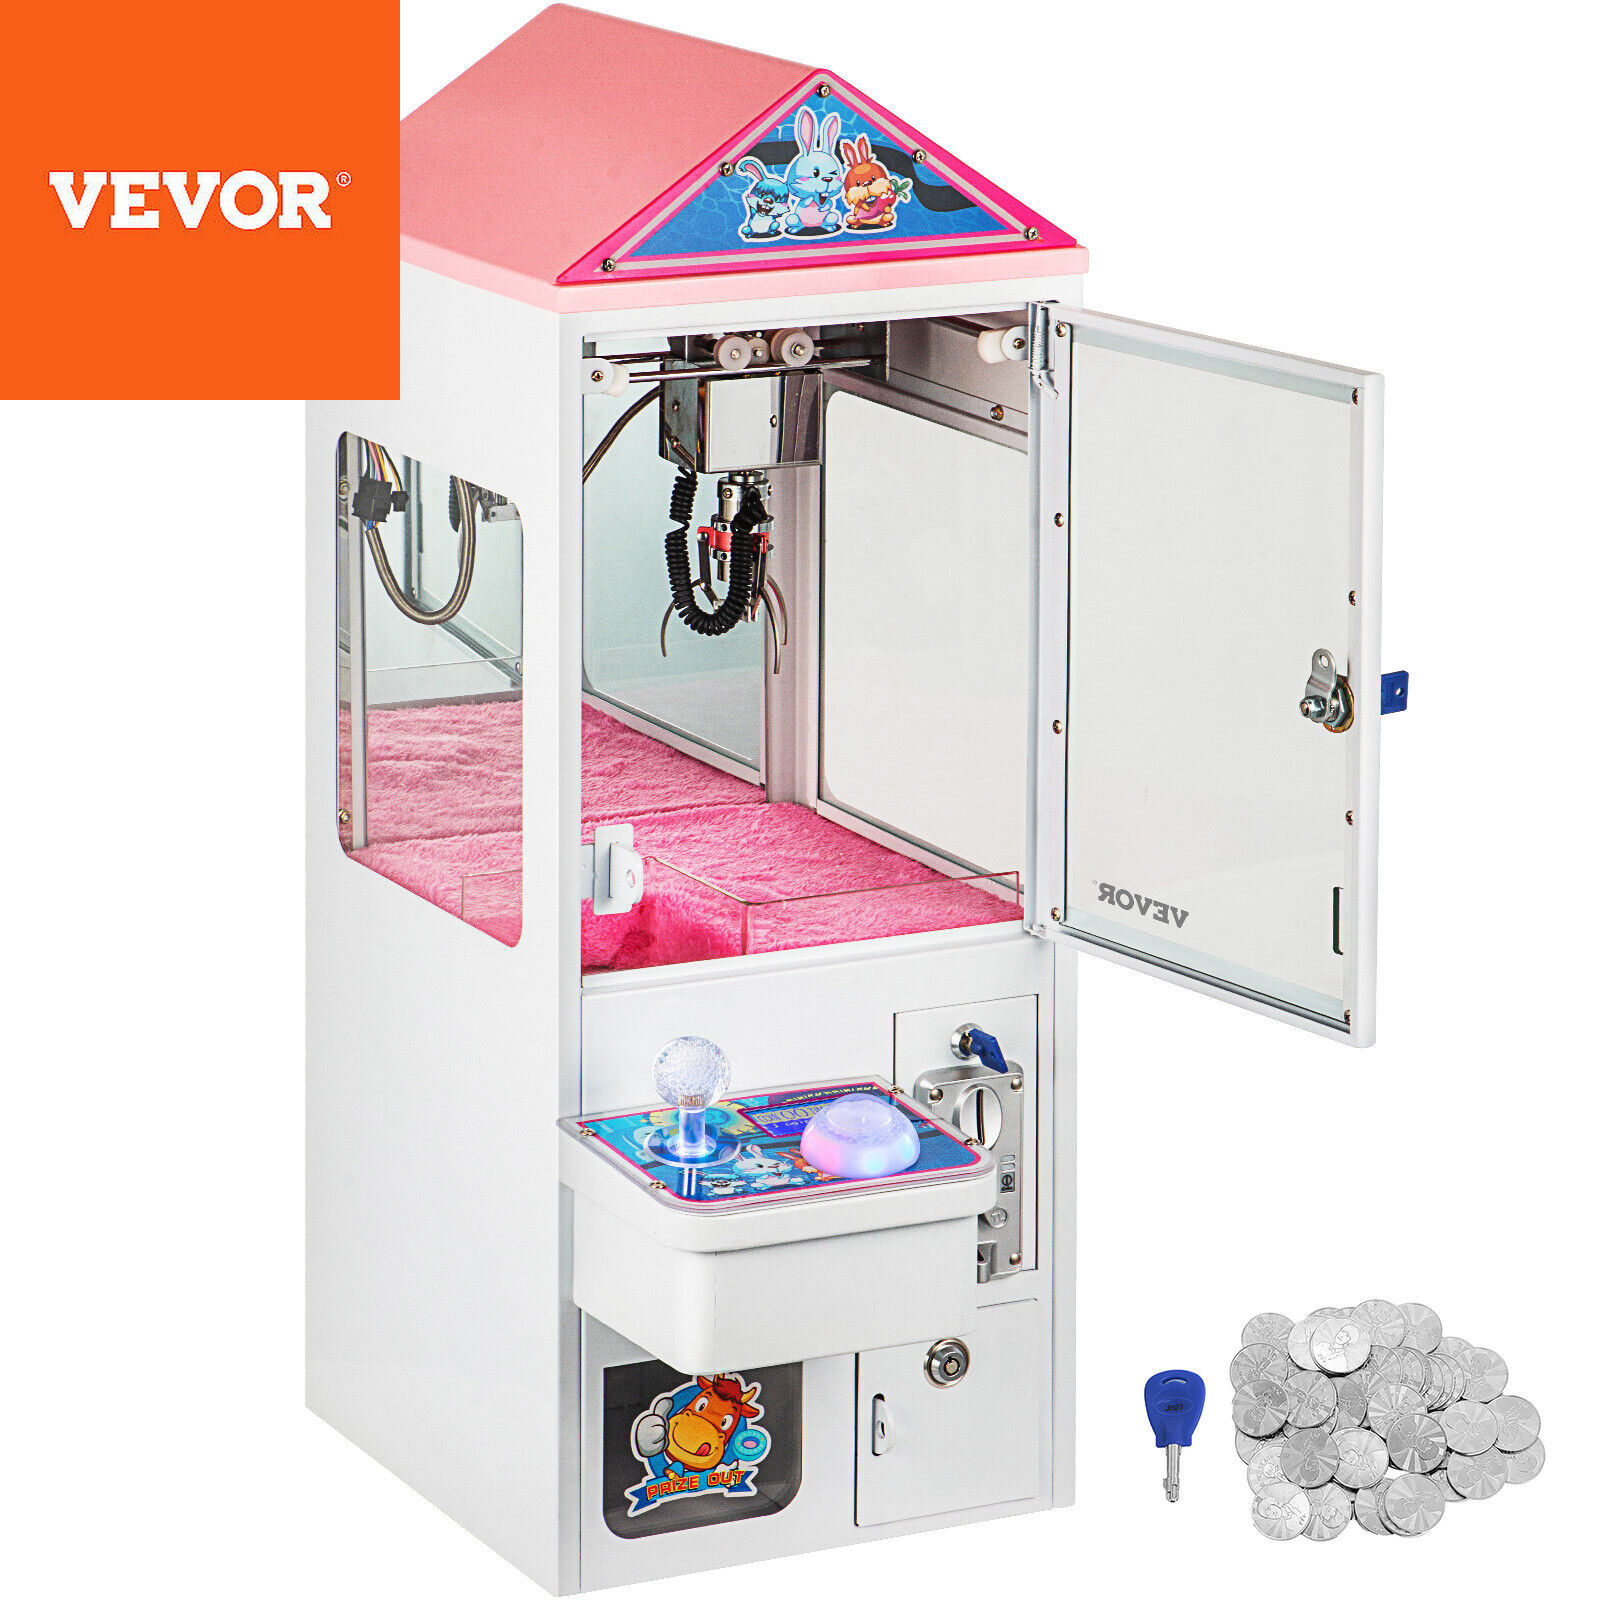 VEVOR Mini Claw Crane Machine 110V Metal Case Bar Candy Toy Catcher Shake-Proof